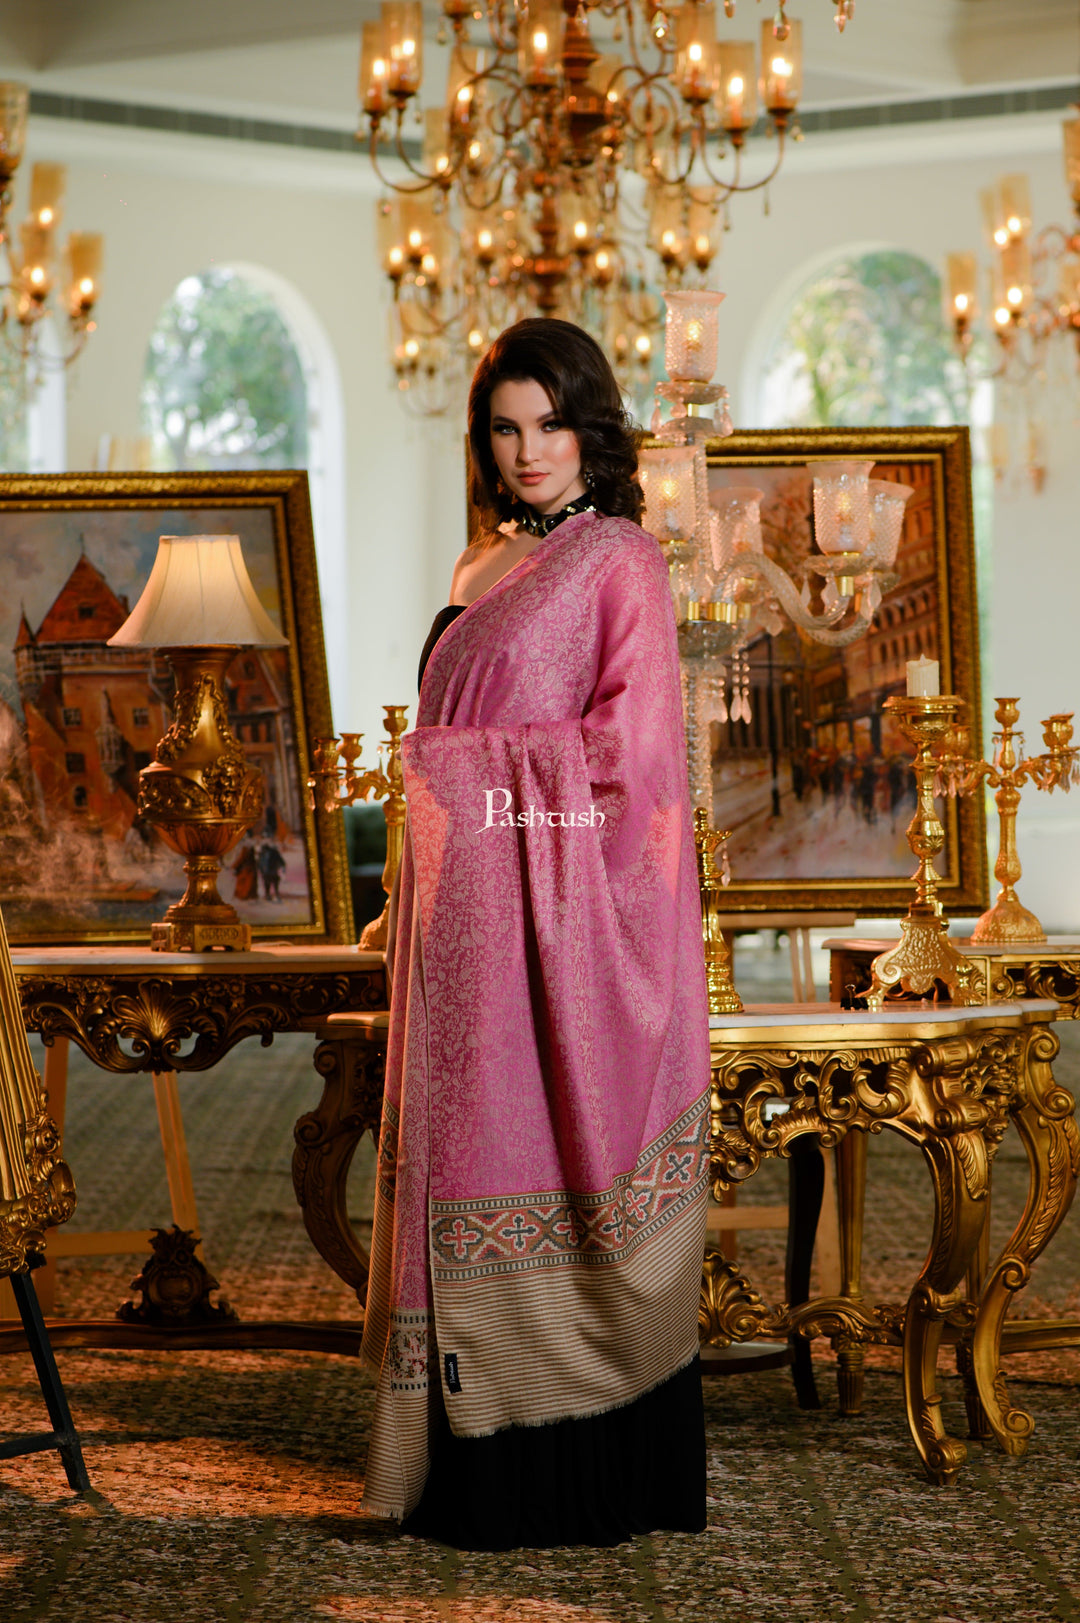 Pashtush India Womens Shawls Pashtush Womens Shawl, Extra Fine Wool, Soft and Warm, Light Weight, Majenta